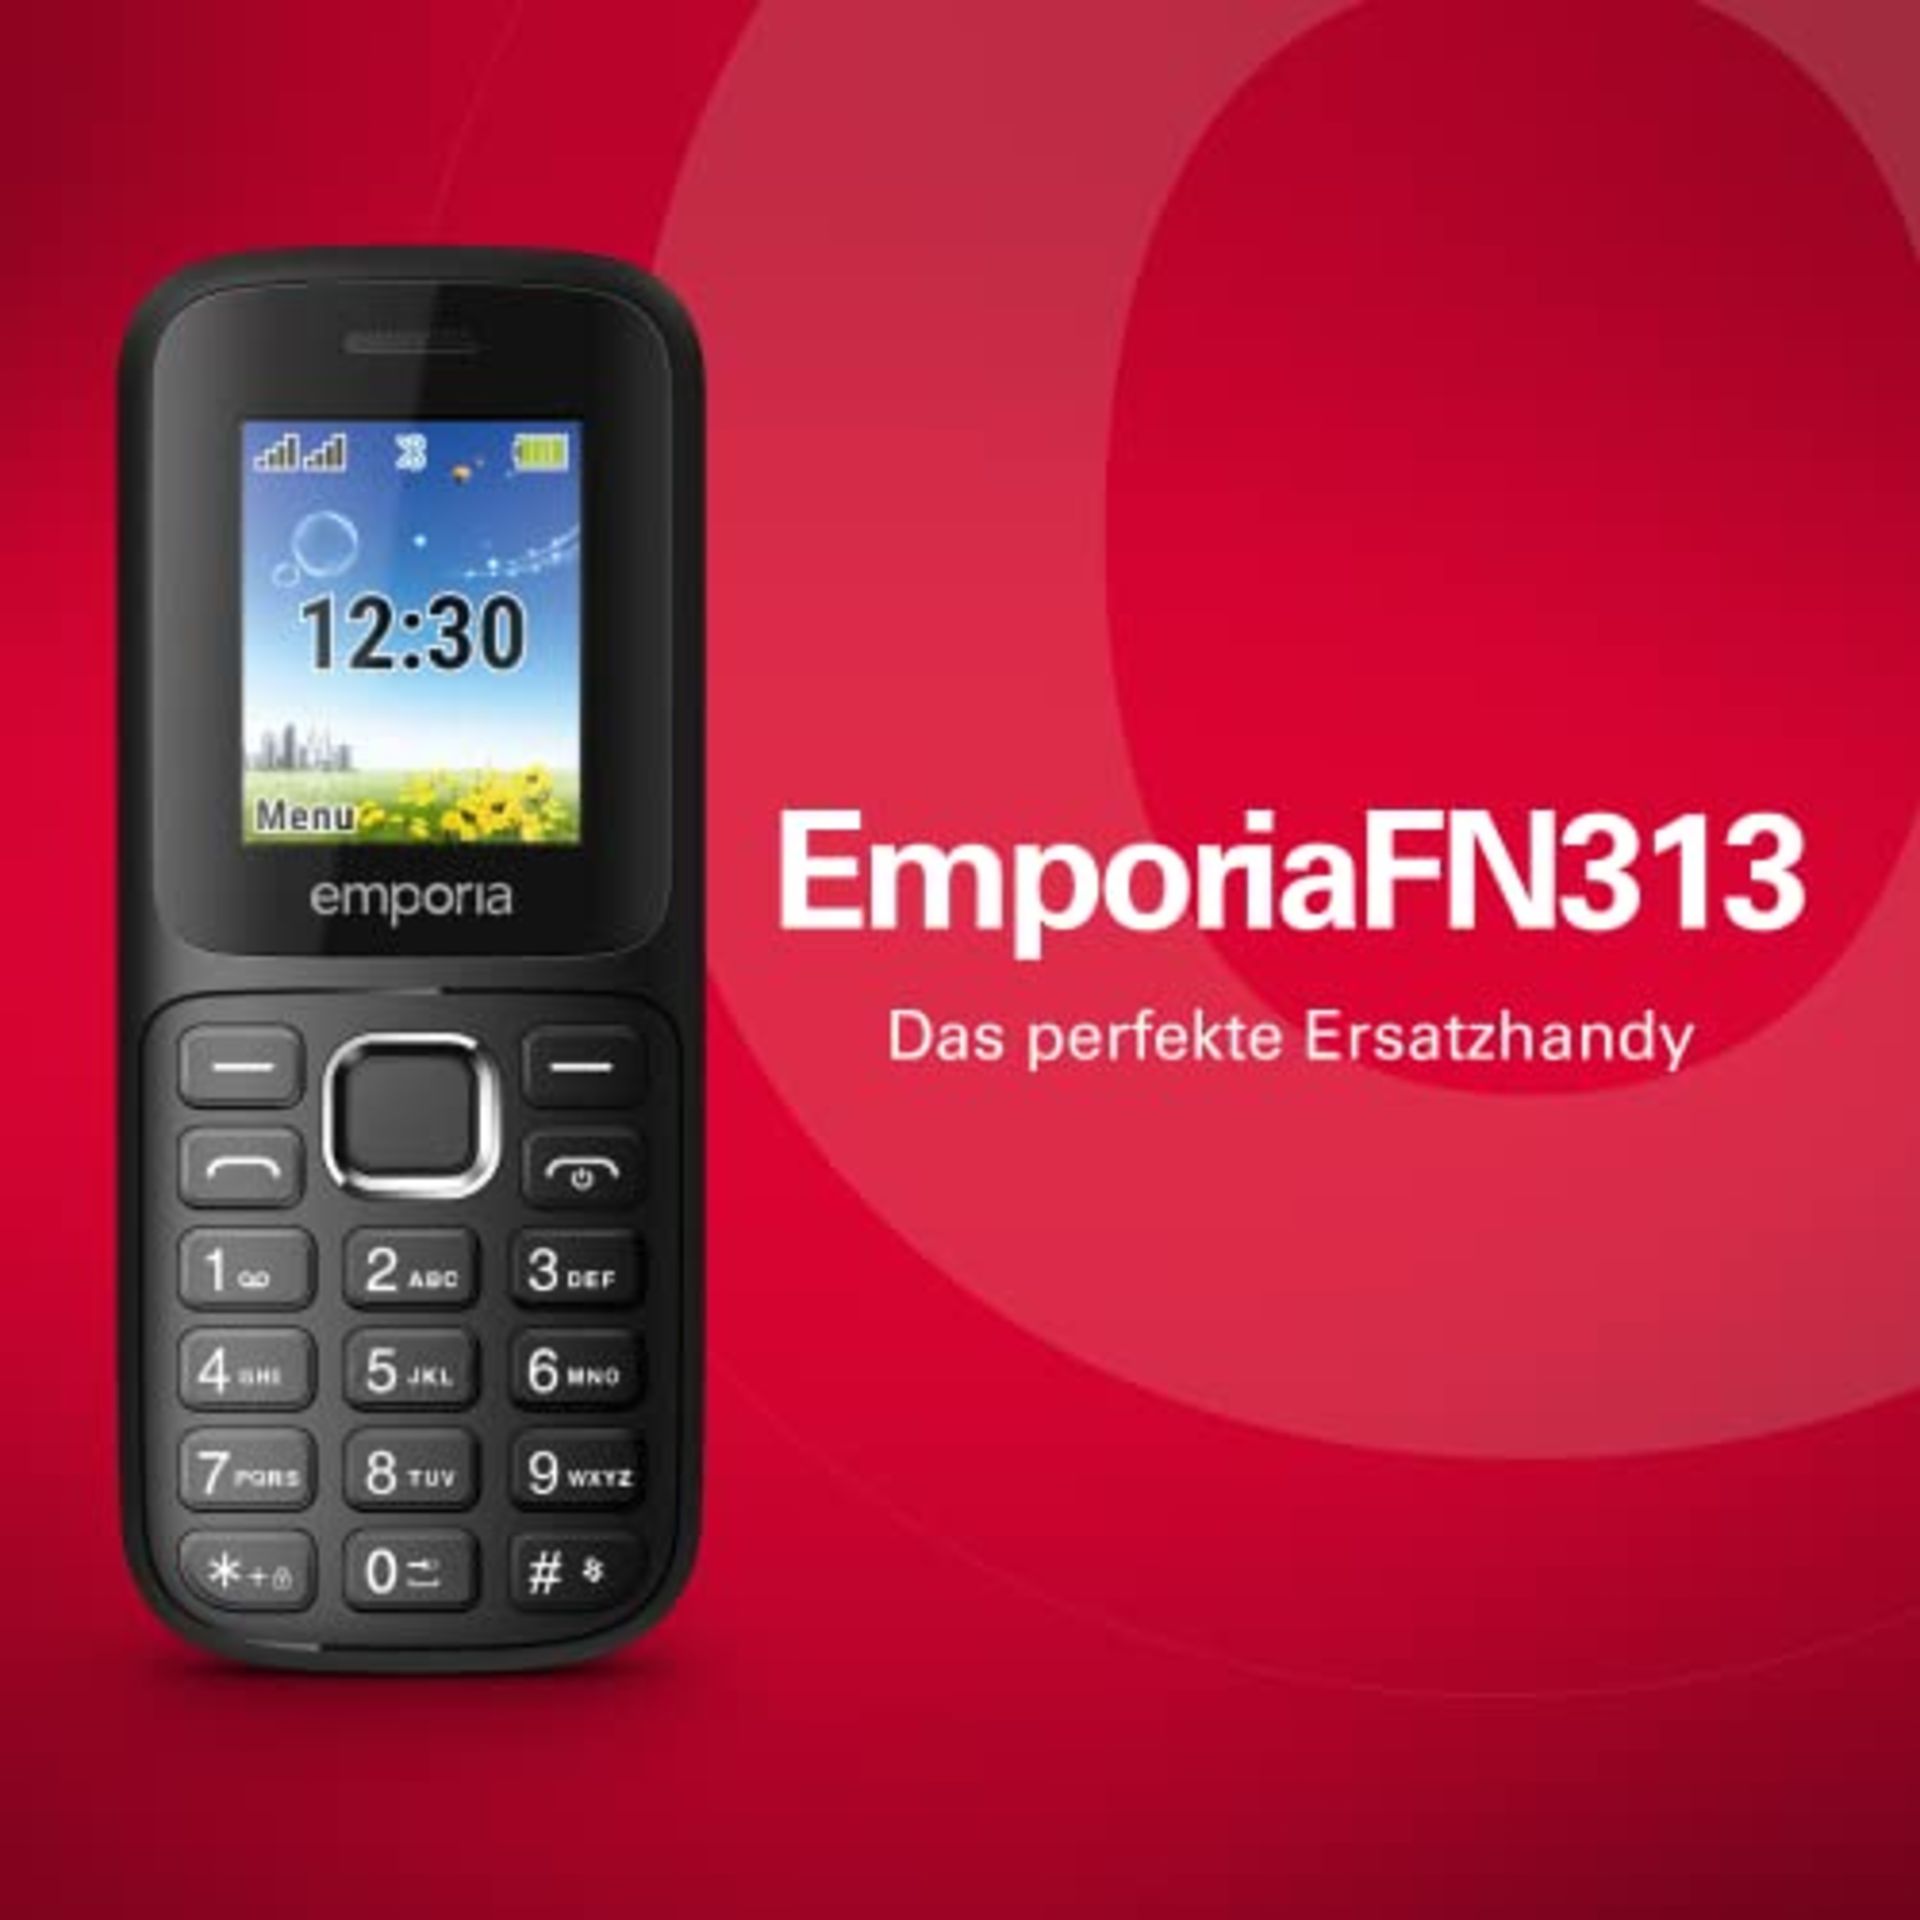 emporiaFN313, 2G mobile phone, Ideal Festival Phone, Dual SIM, 1.77 inch colour displa